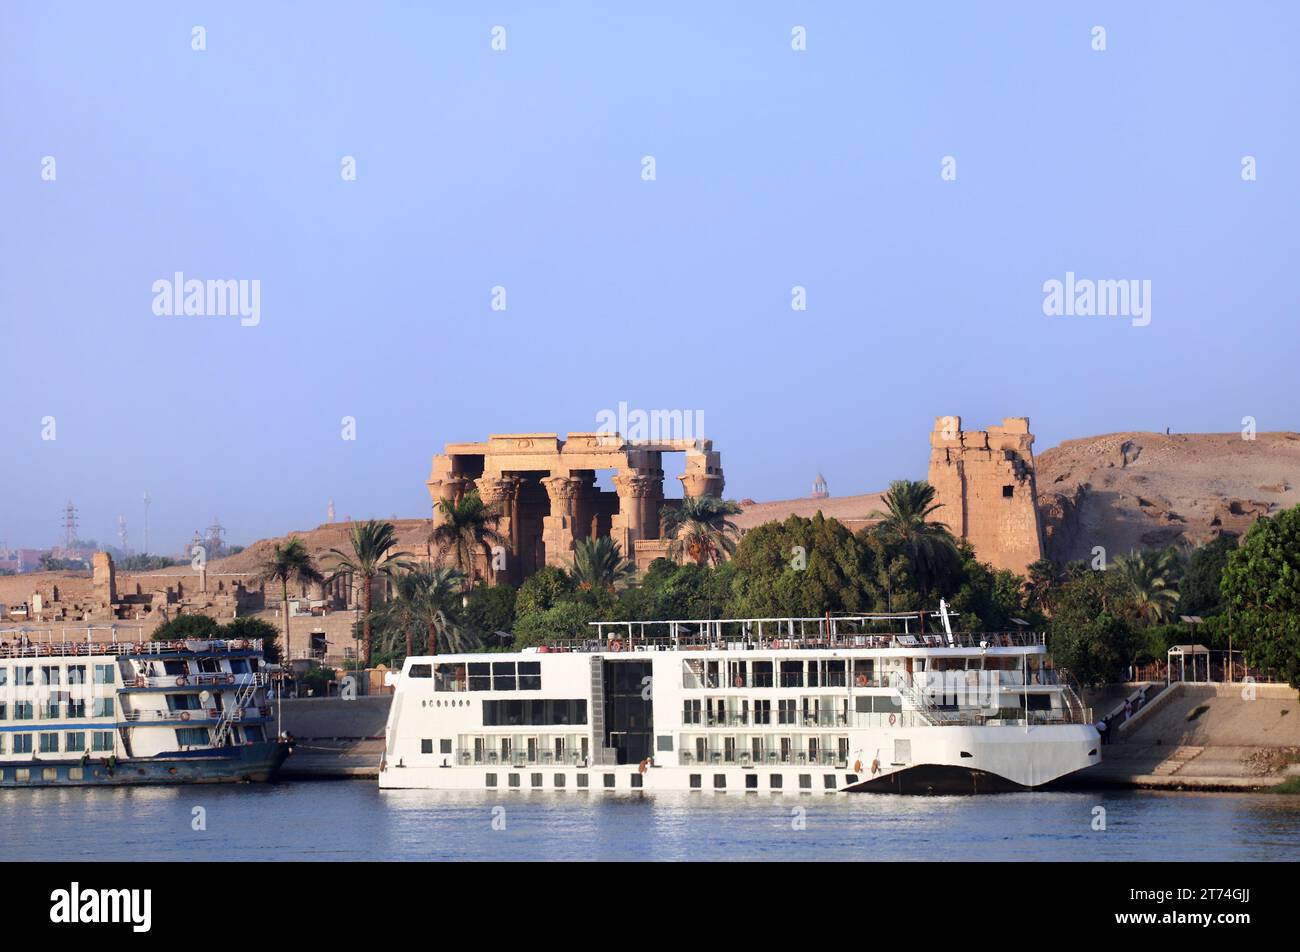 Cruise ship on Nile river near Kom Ombo Temple of gods Horus and Sobek, Egypt, Africa. Luxury Nile Cruise. Summer vacation, relaxing on cruise ship. C Stock Photo